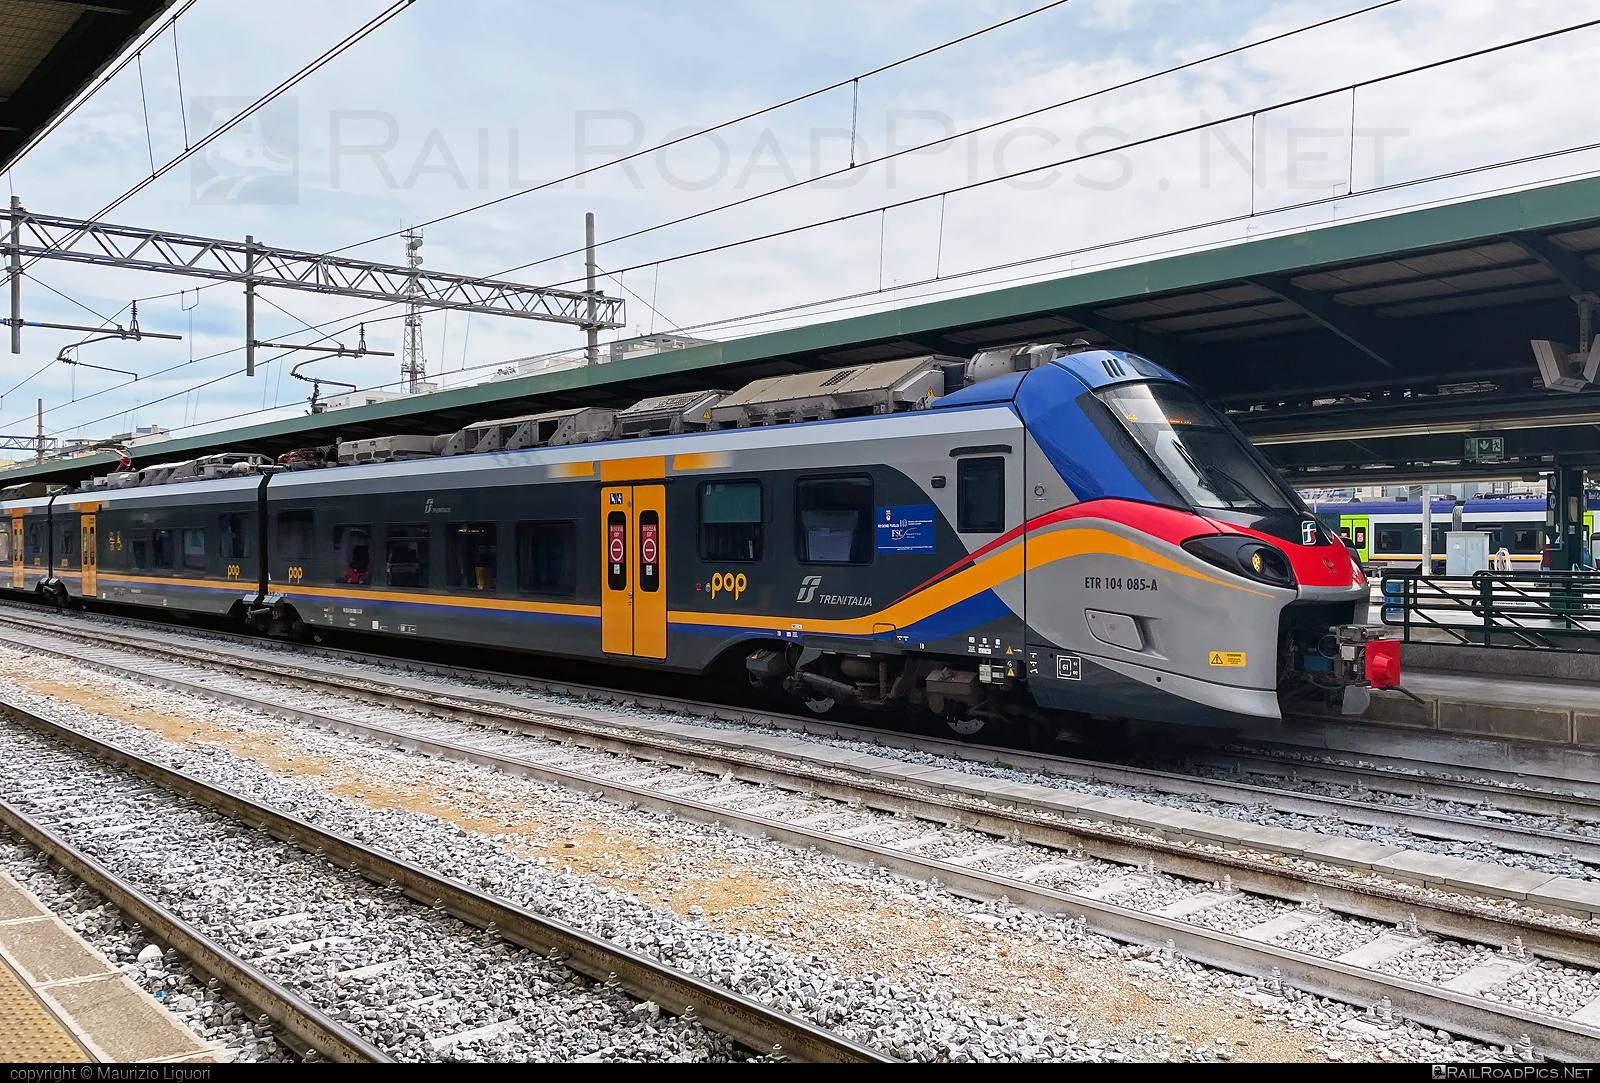 Alstom Coradia Stream ”Pop” - ETR 104 085-A operated by Trenitalia S.p.A. #alstom #alstomCoradia #coradia #coradiaStream #coradiaStreamPop #ferroviedellostato #fs #fsitaliane #pop #trenitalia #trenitaliaspa